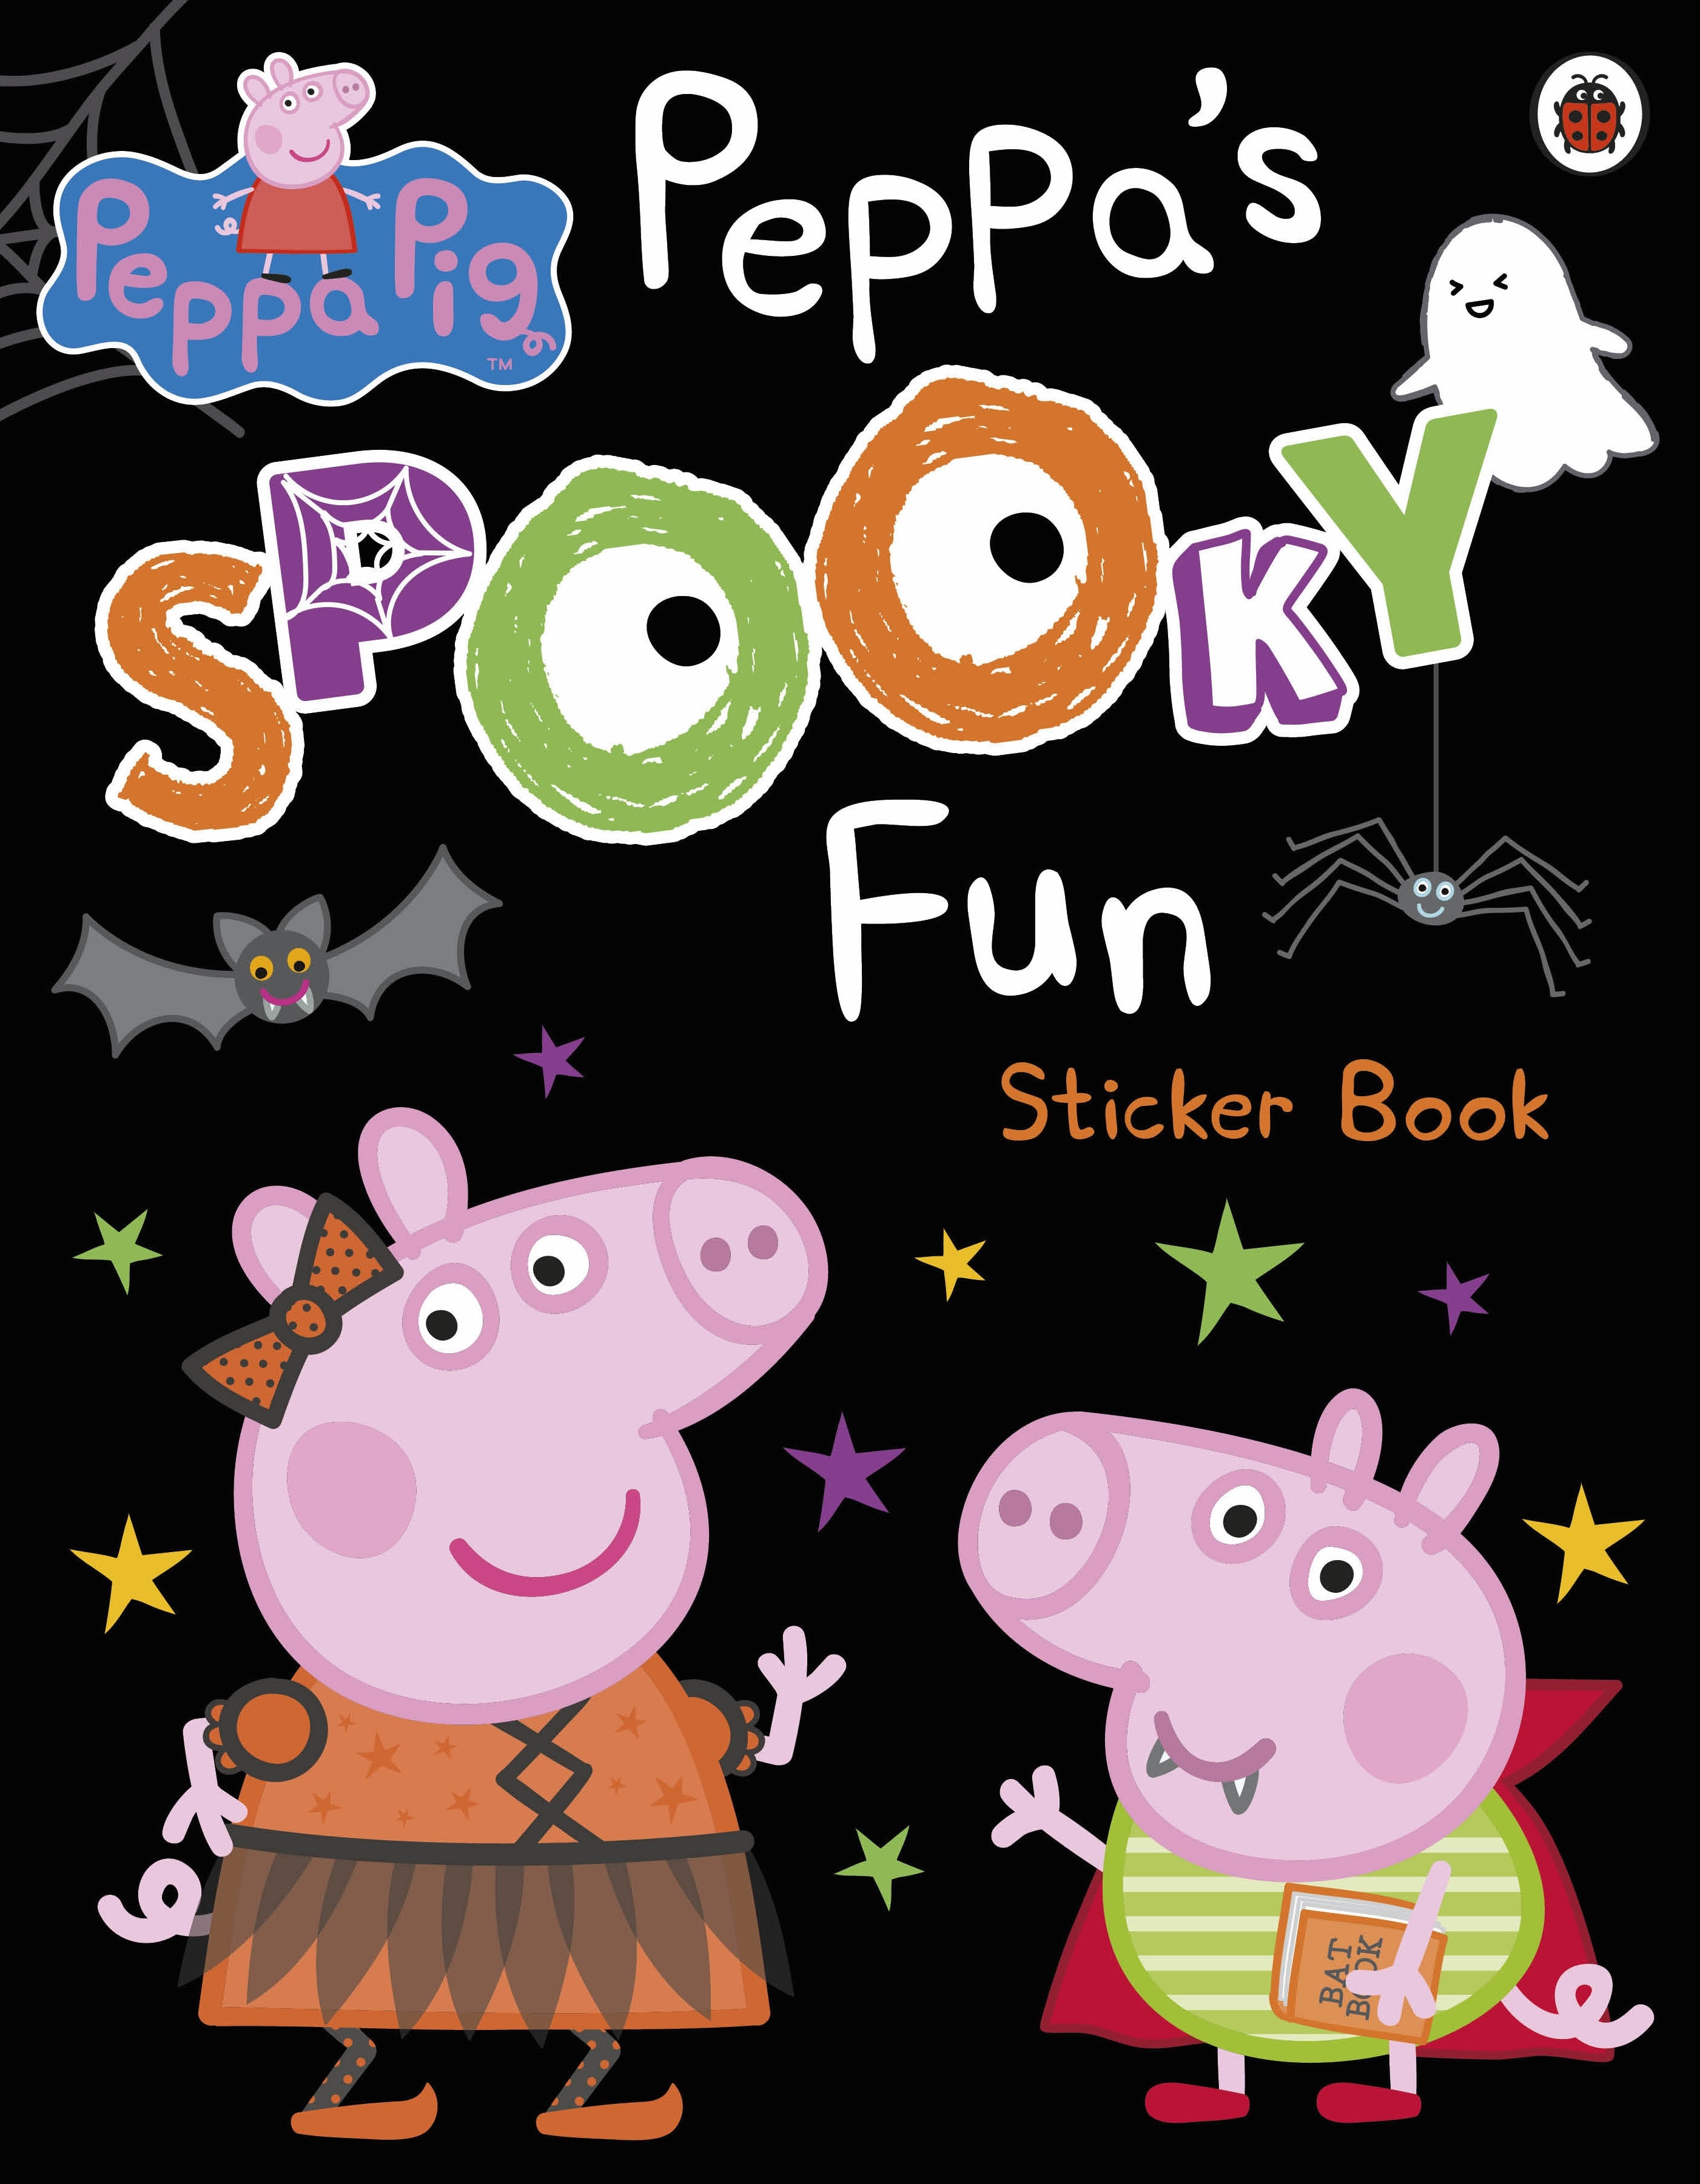 Book “Peppa Pig: Peppa's Spooky Fun Sticker Book” by Peppa Pig — September 5, 2019